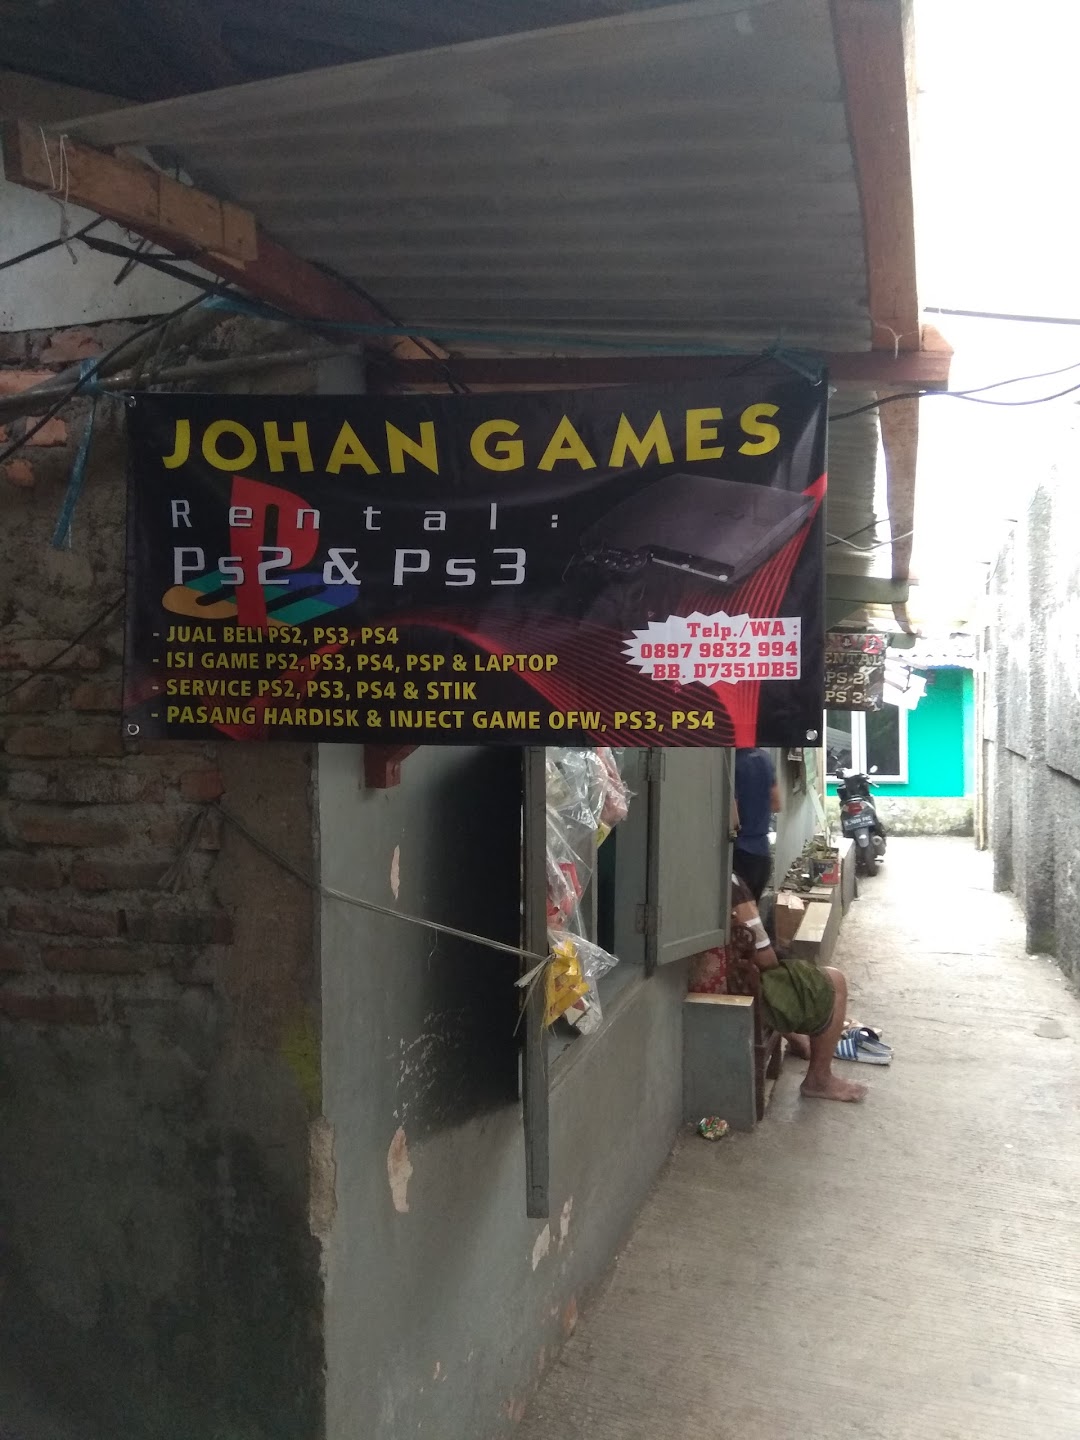 JOHAN GAMES